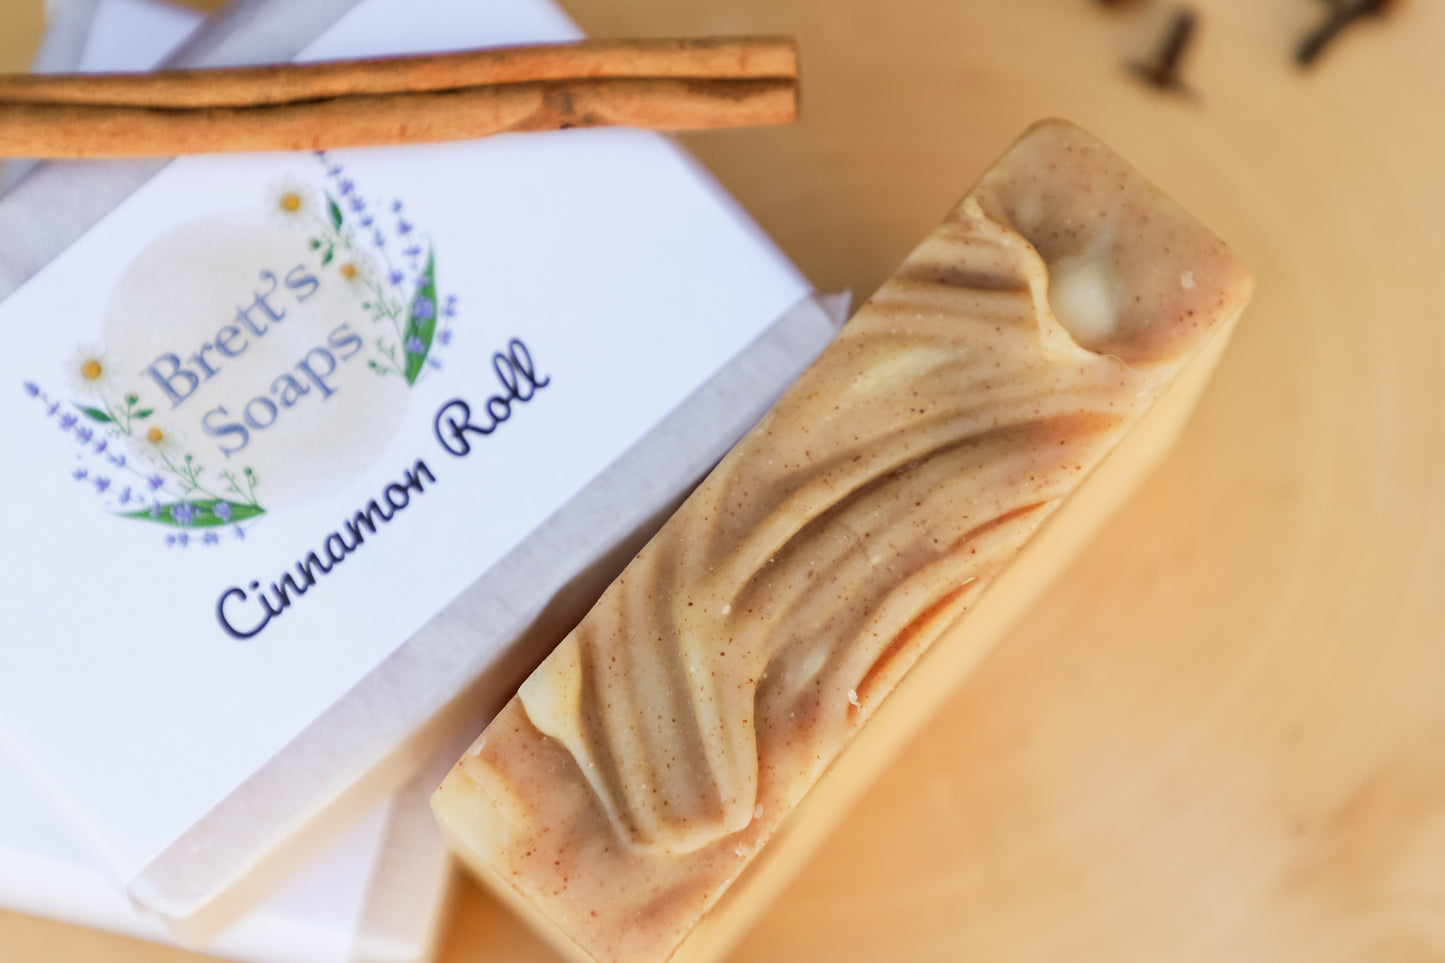 Cinnamon Roll Soap